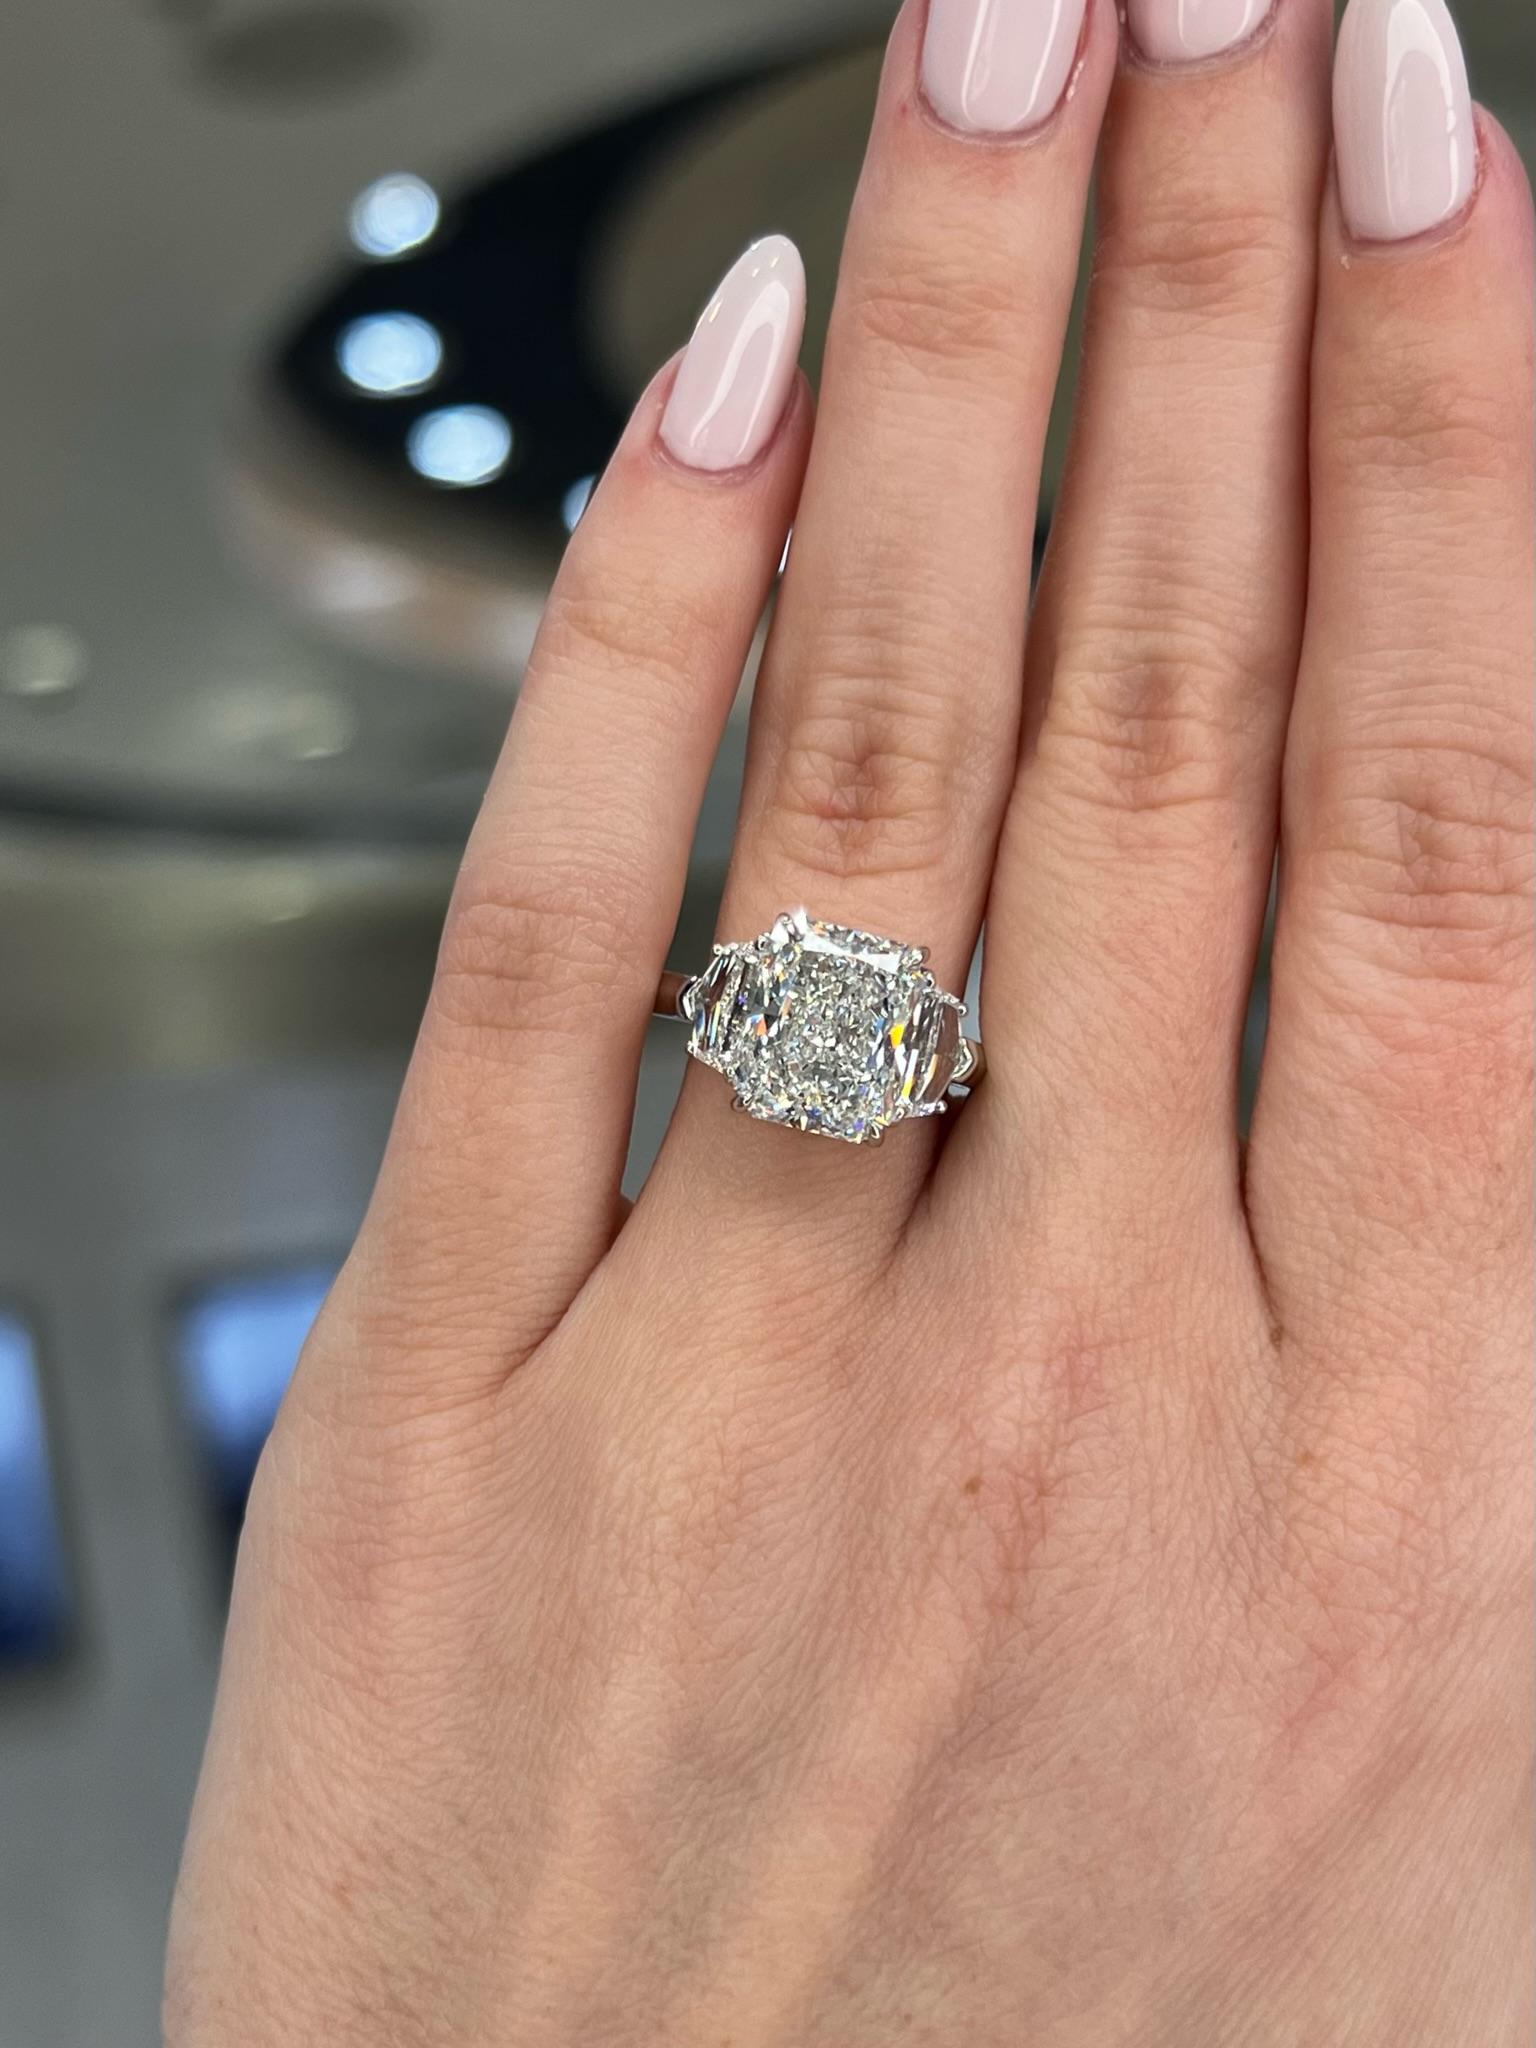 David Rosenberg 5.01 Carat Radiant Cut F SI1 GIA Diamond Engagement Ring For Sale 7